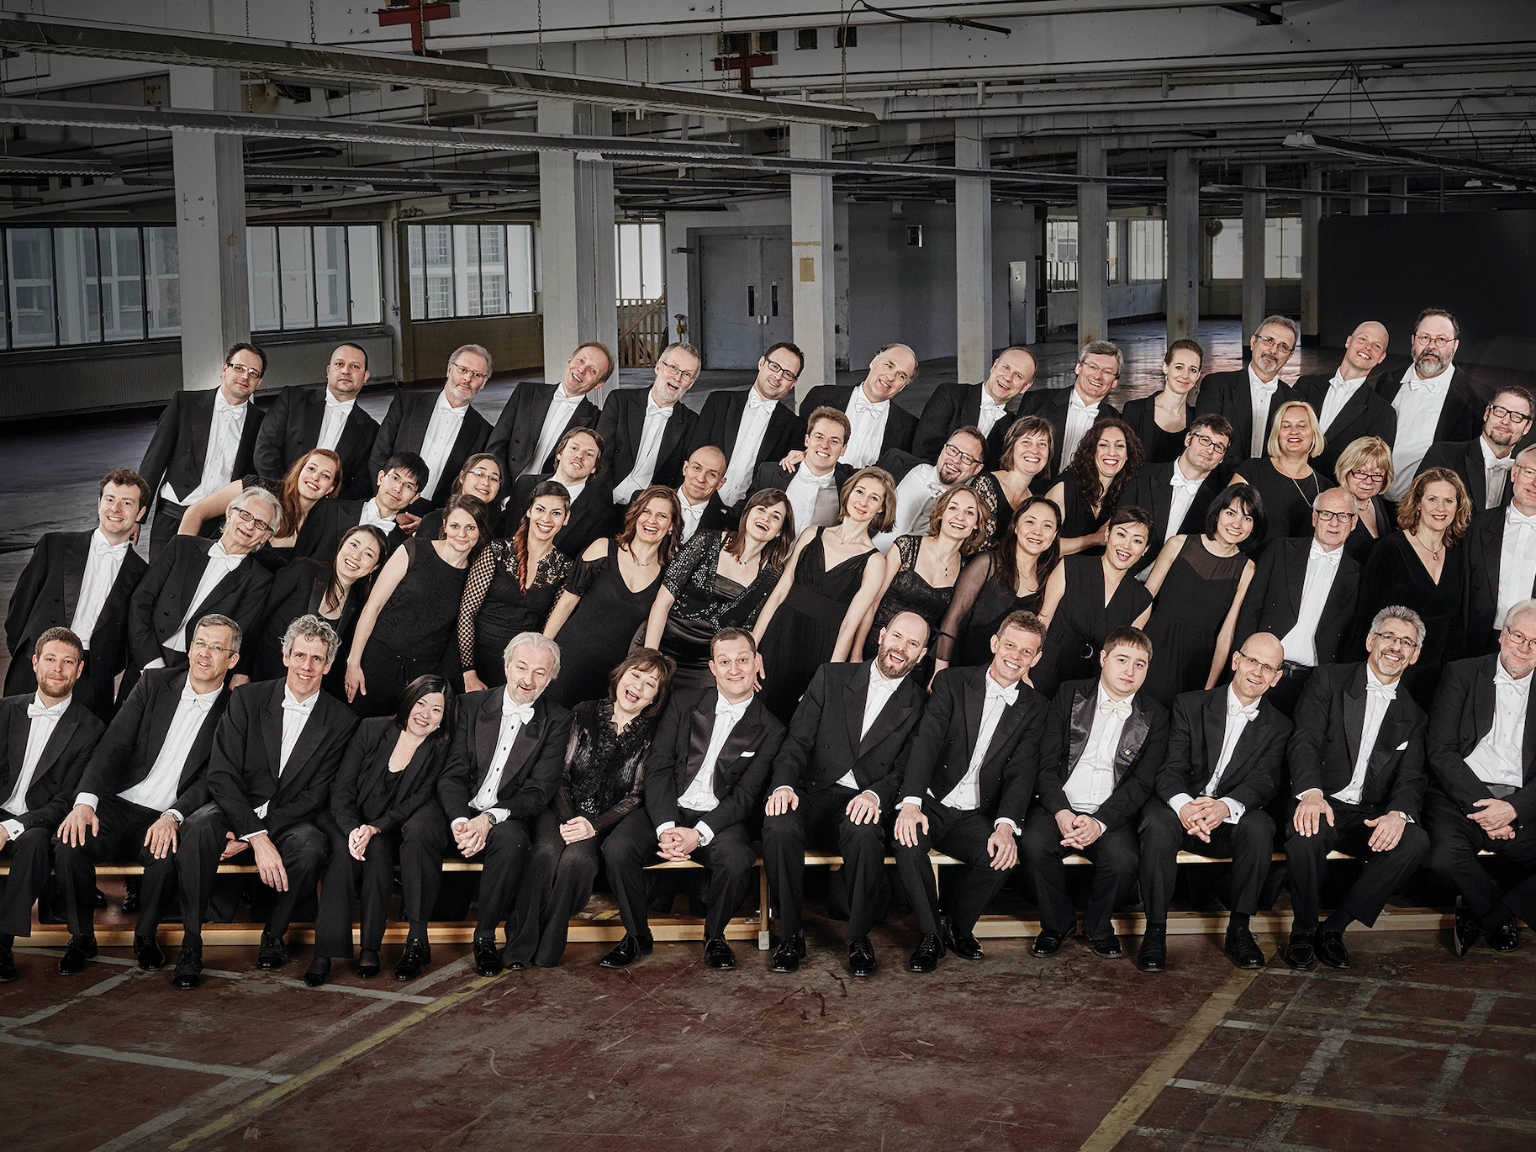 Orchesterbild der Nürnberger Symphoniker. Alle Musiker*innen neigen sich auf dem Gruppenbild nach rechts.